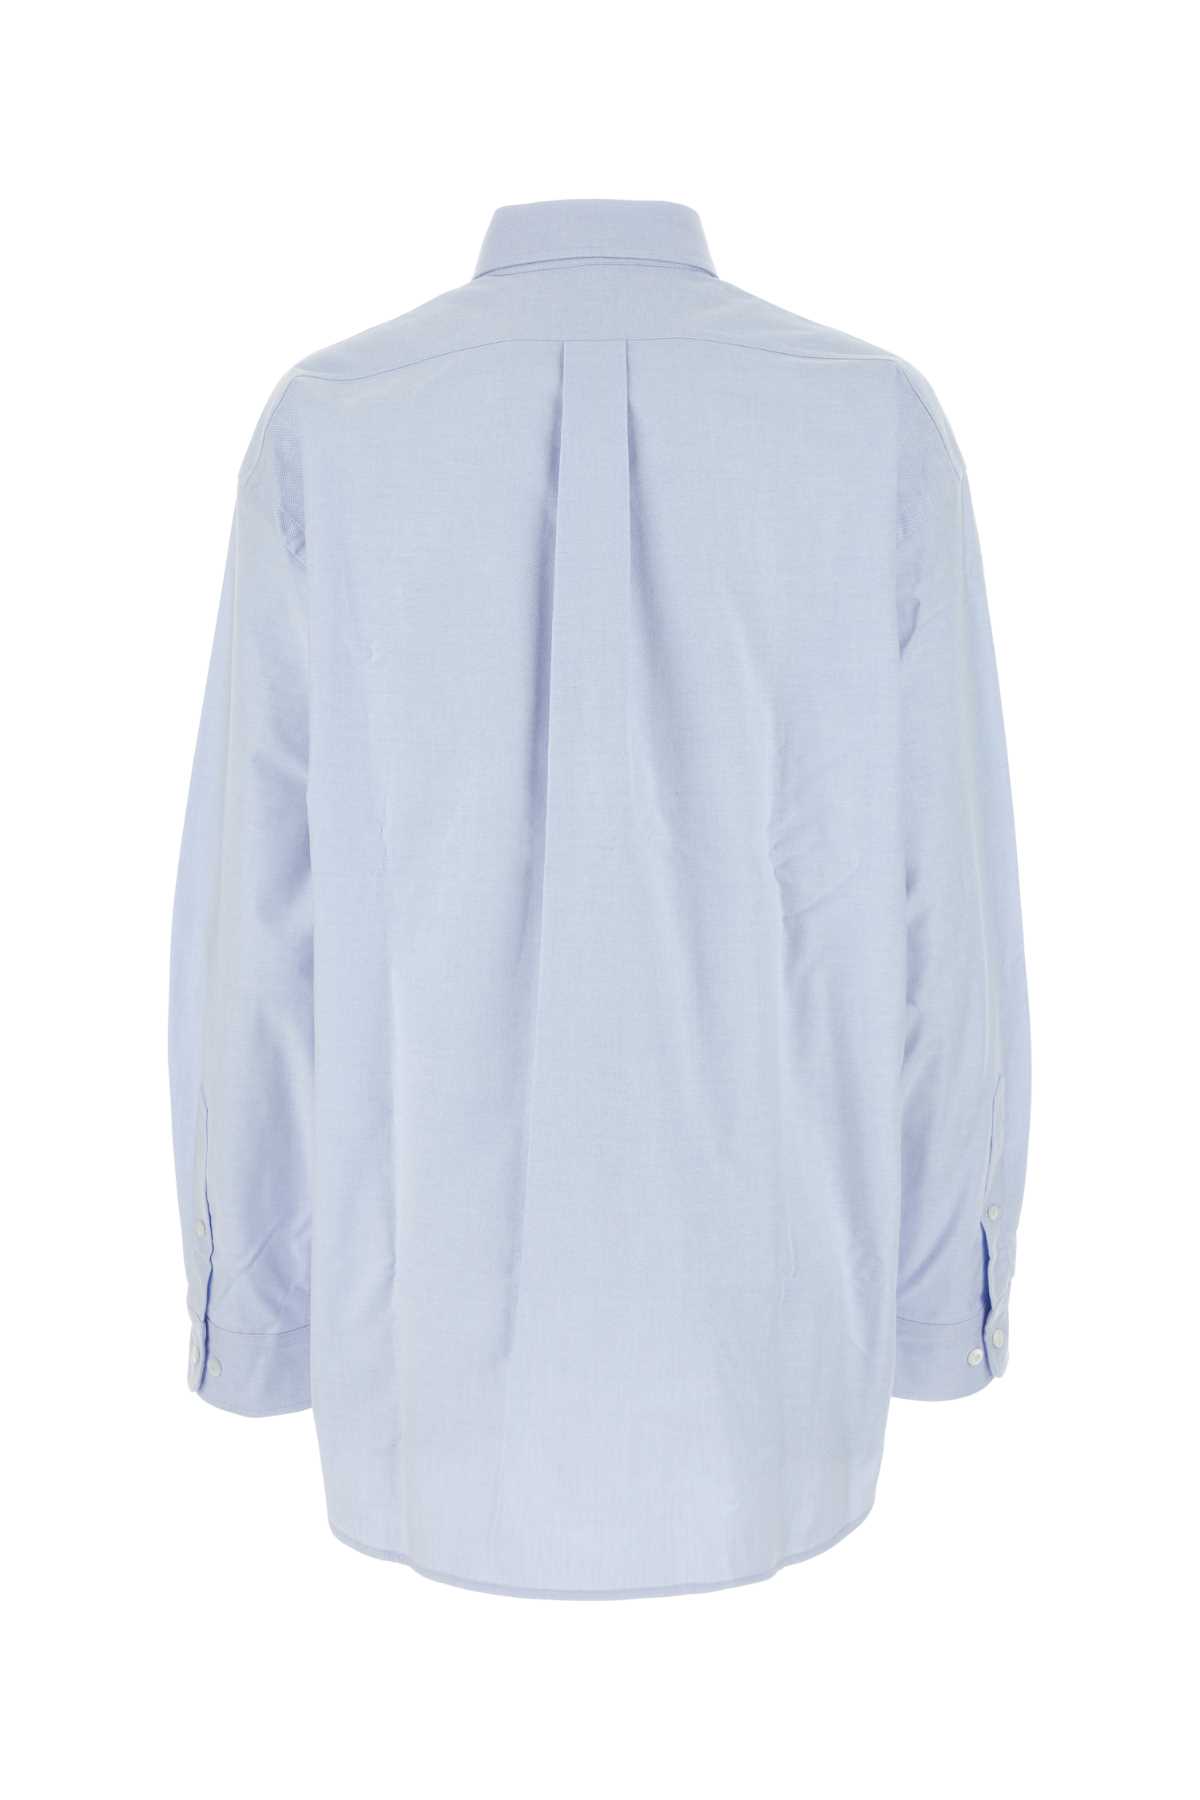 Prada Light Blue Oxford Oversize Shirt In Cielo